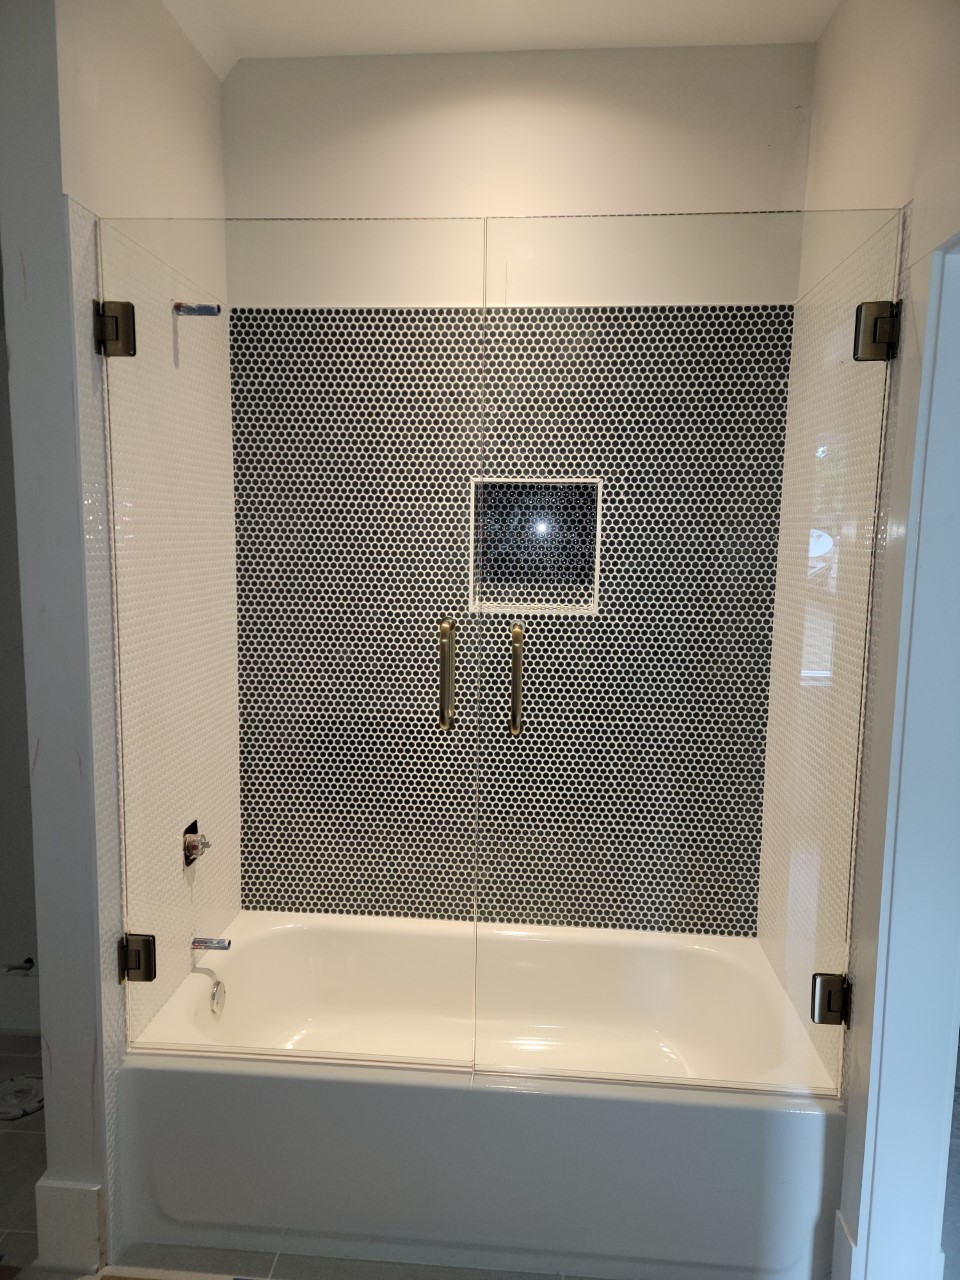 Bath Tub Area With Glass Doors